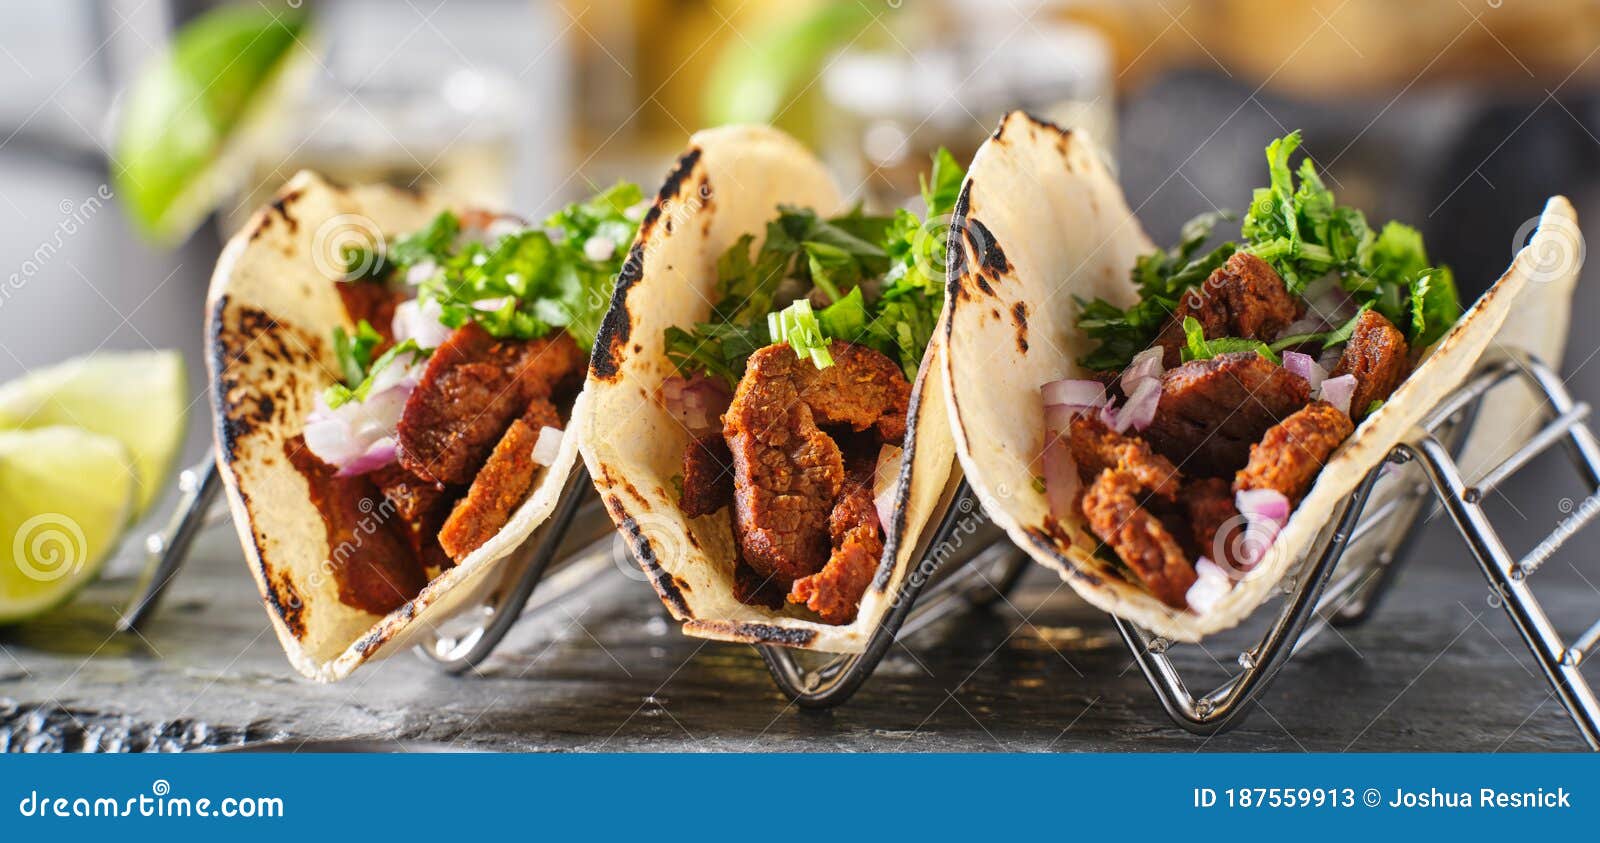 Metal Taco Holder with Three Mexican Carne Asada Street-tacos